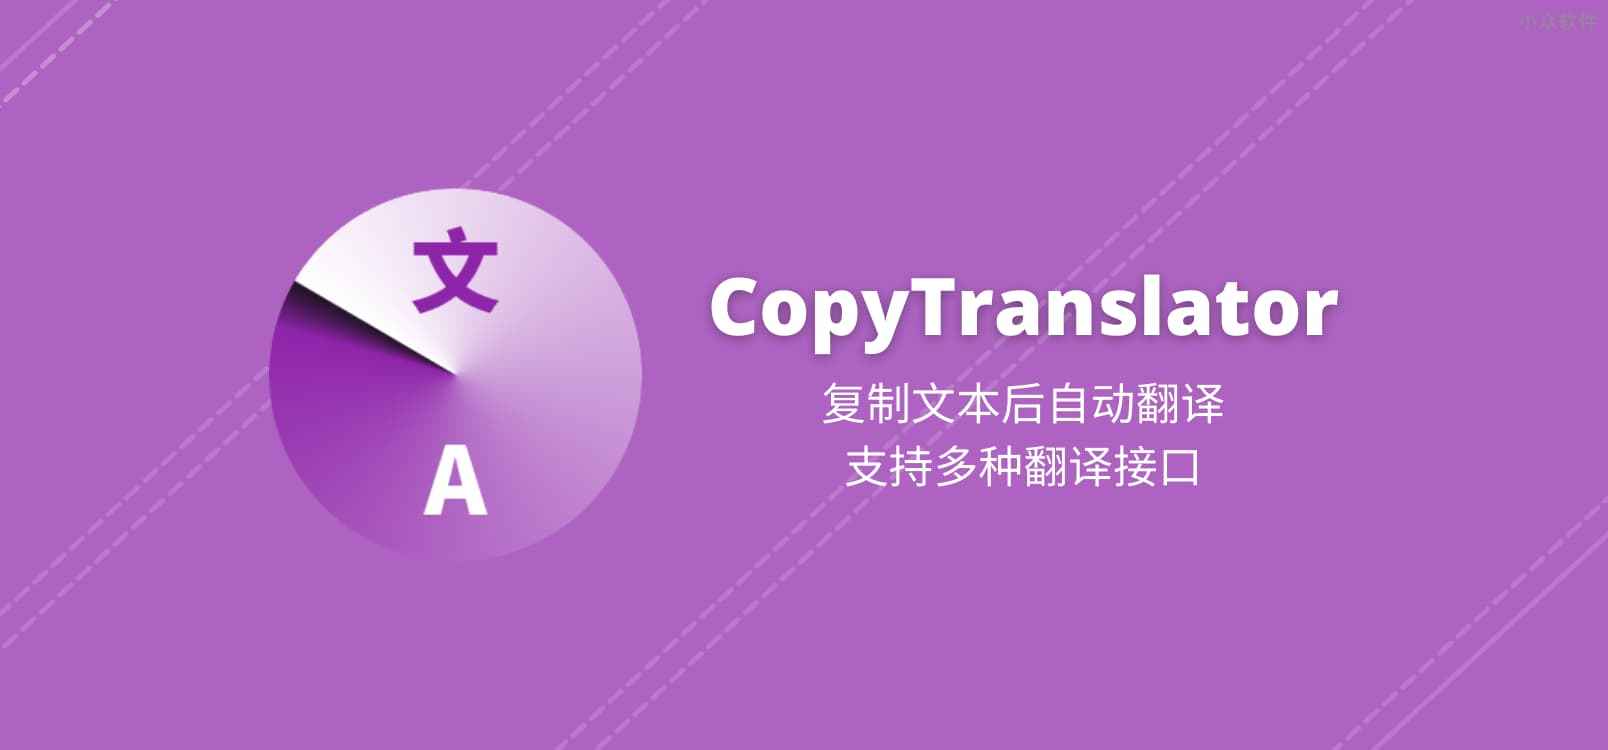 CopyTranslator – 复制文本后自动翻译，支持多种翻译接口